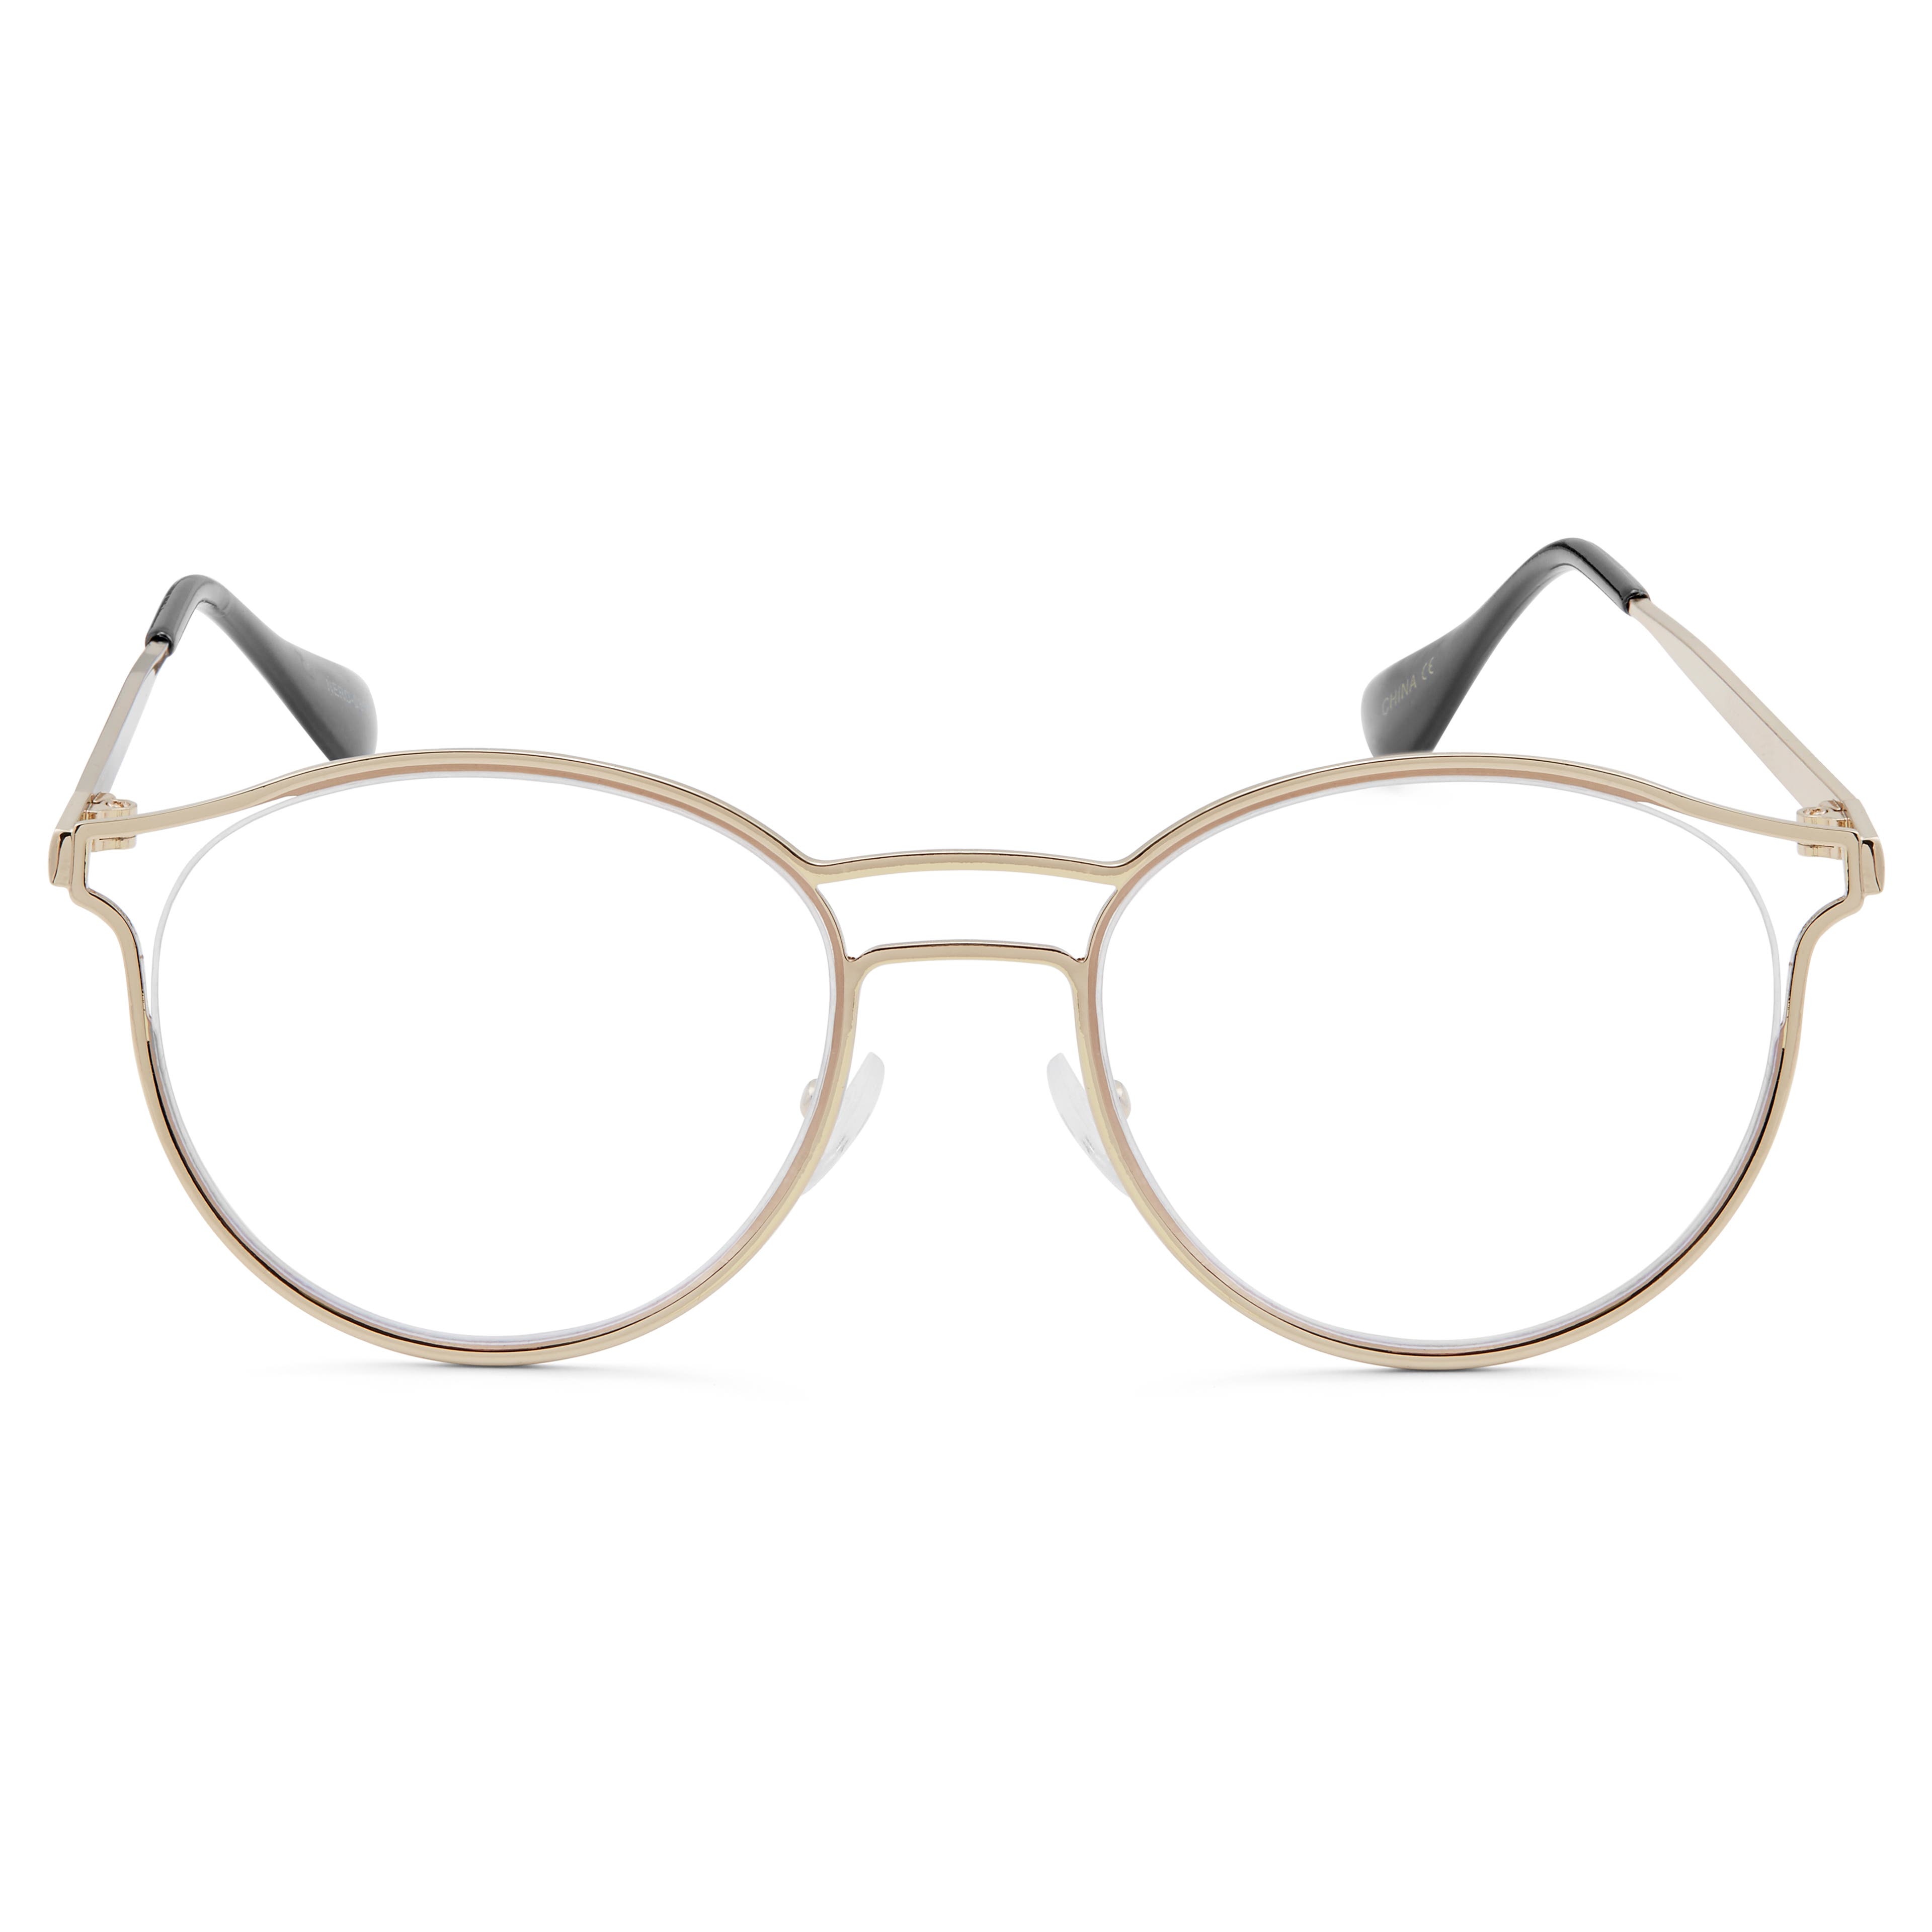 The Brainiac Gold-Tone Frame Glasses